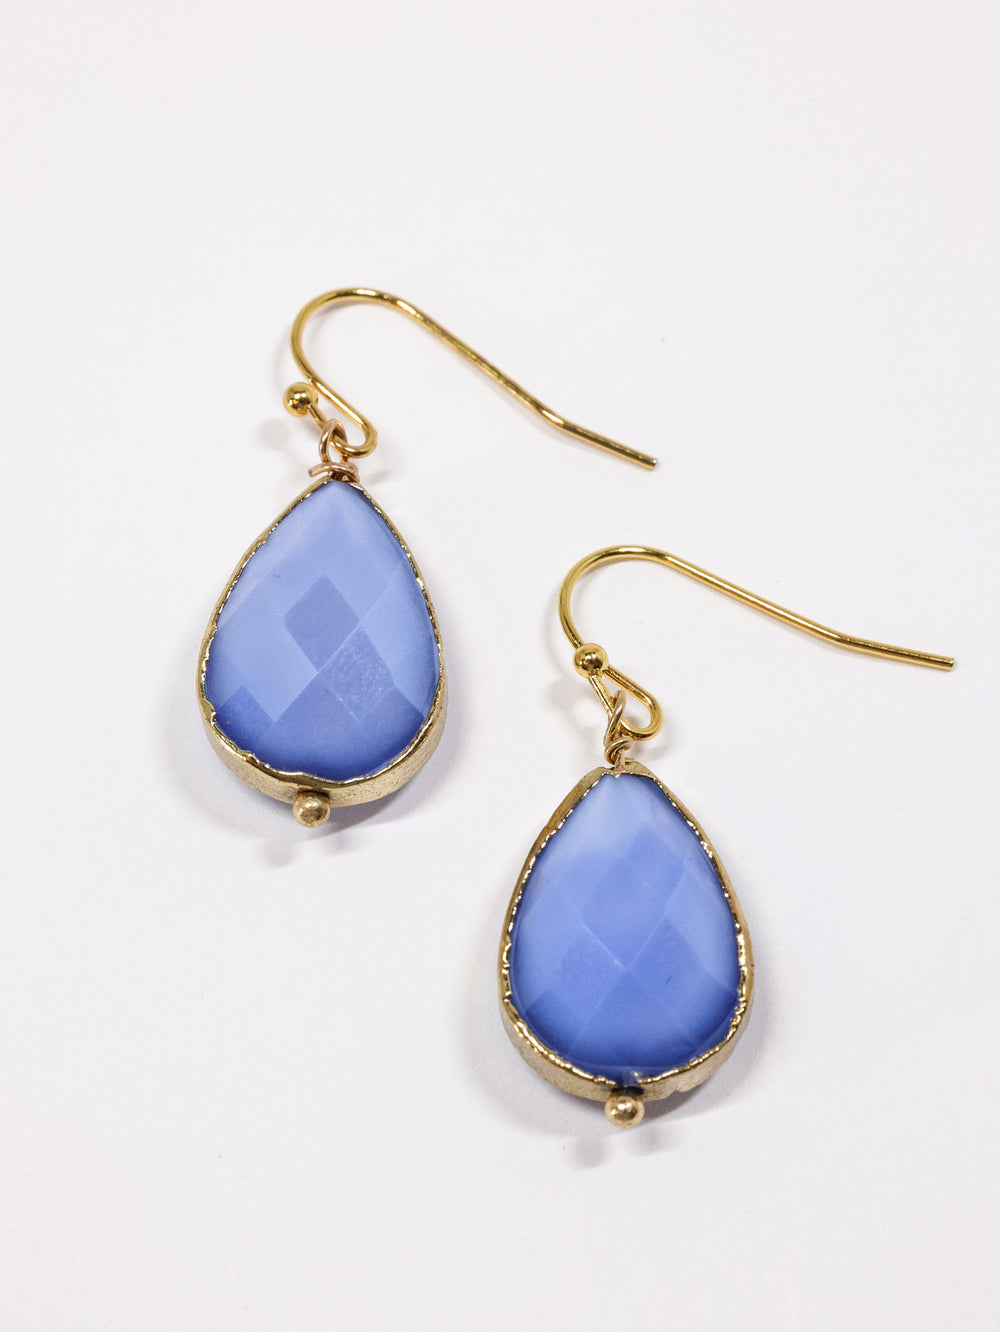 Blue and gold tear drop nickel free earrings